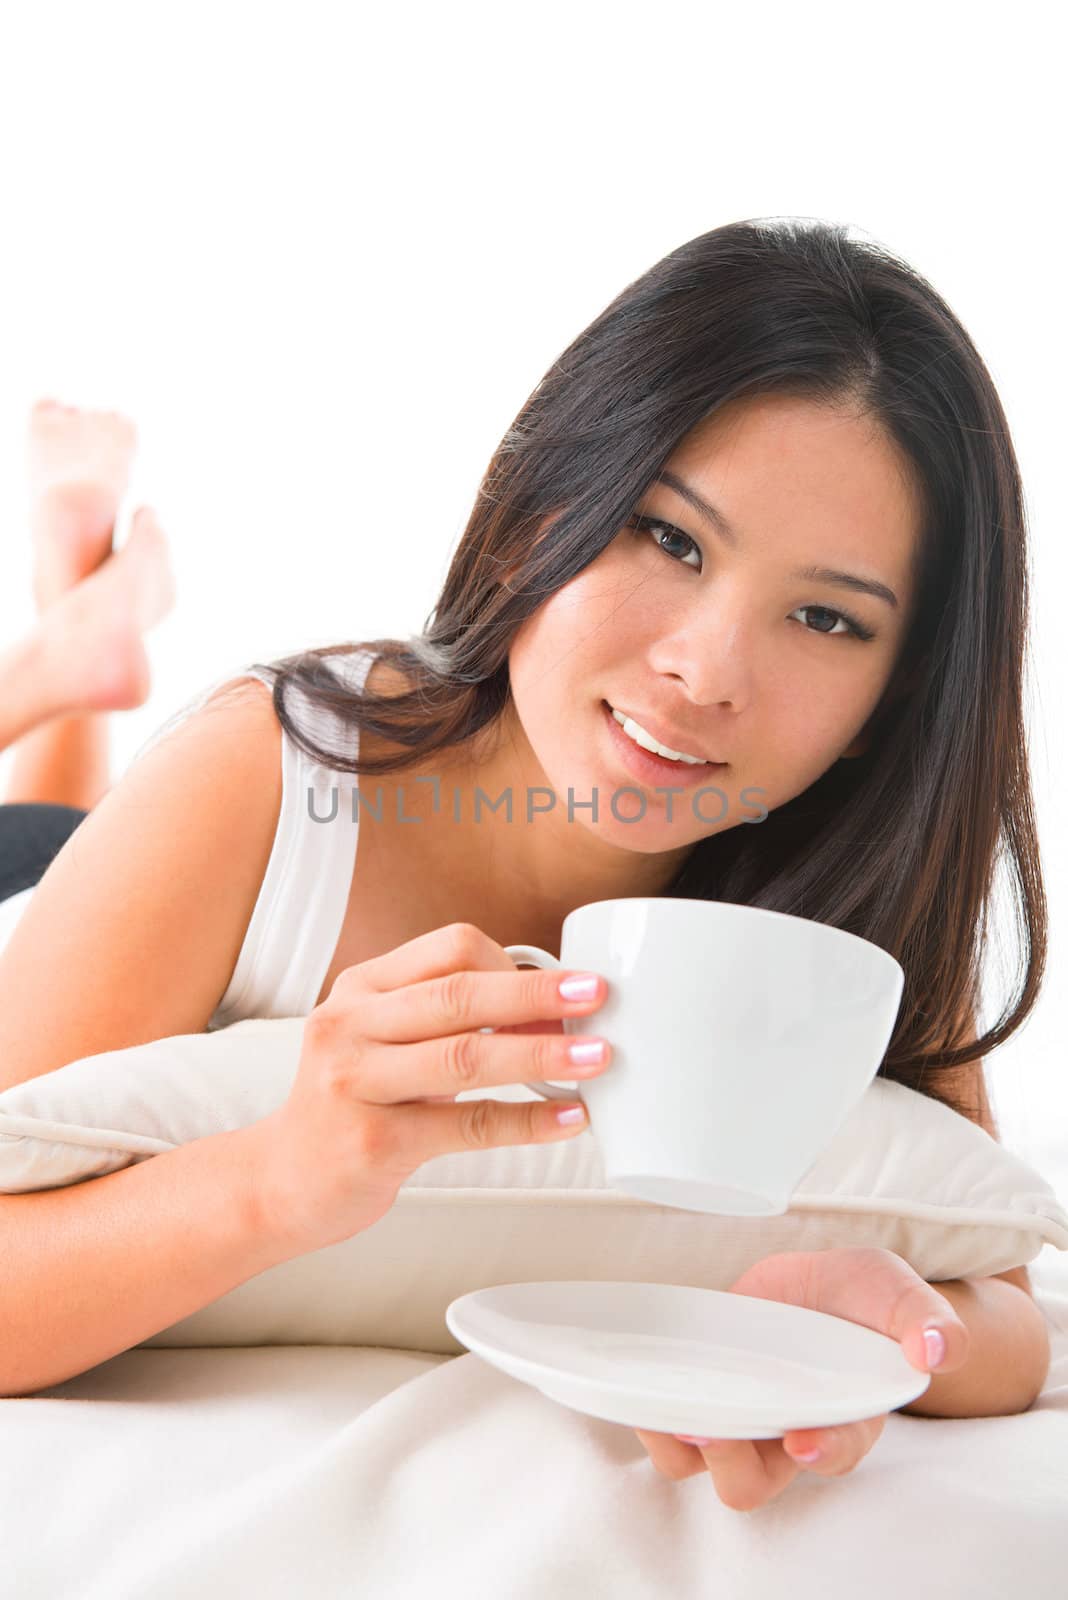 Drinking coffee on bed by szefei